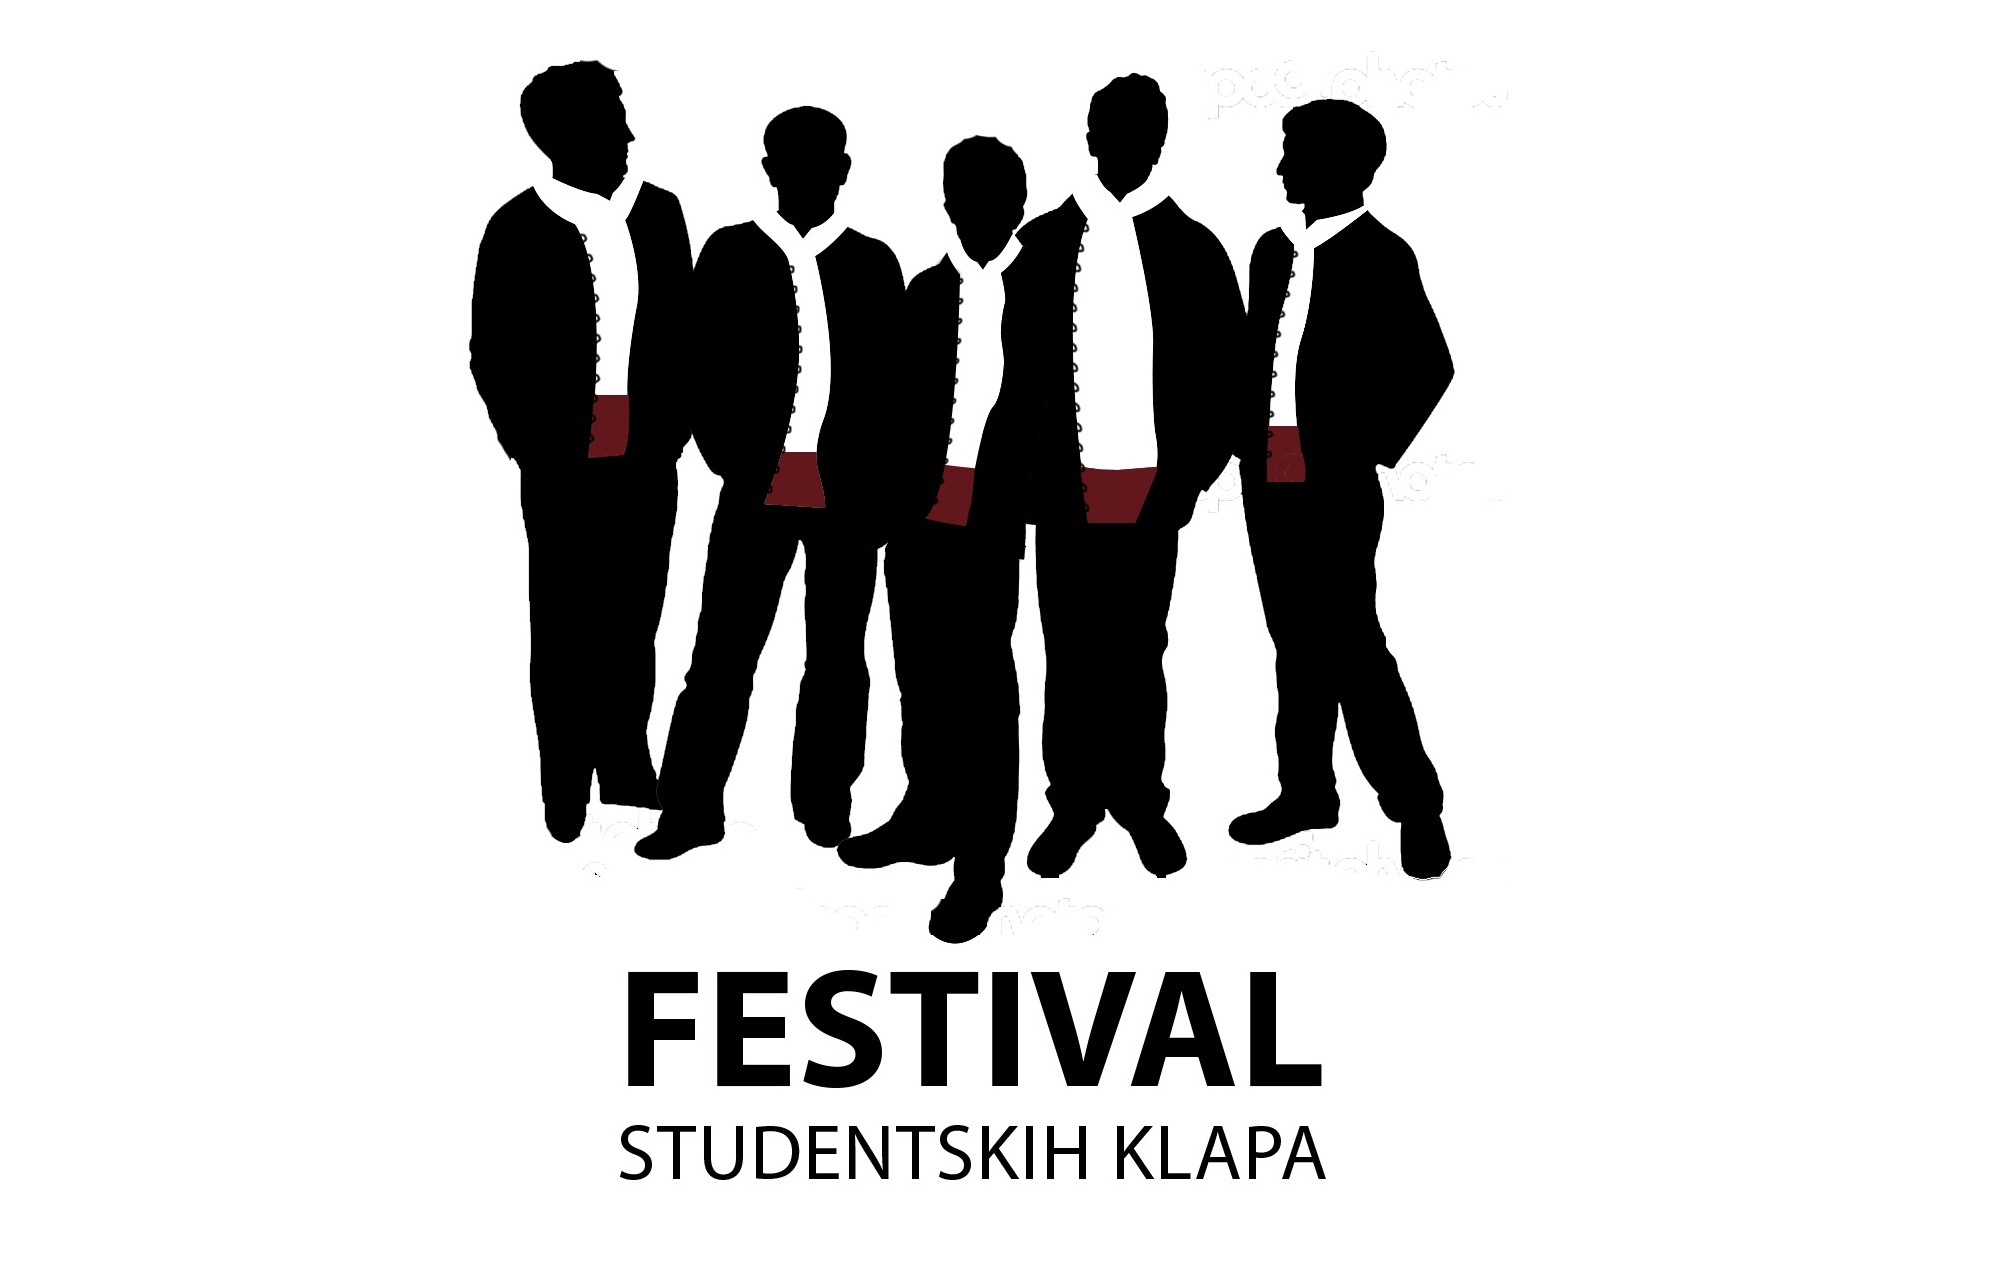 Festival studentskih klapa - Studentski.hr